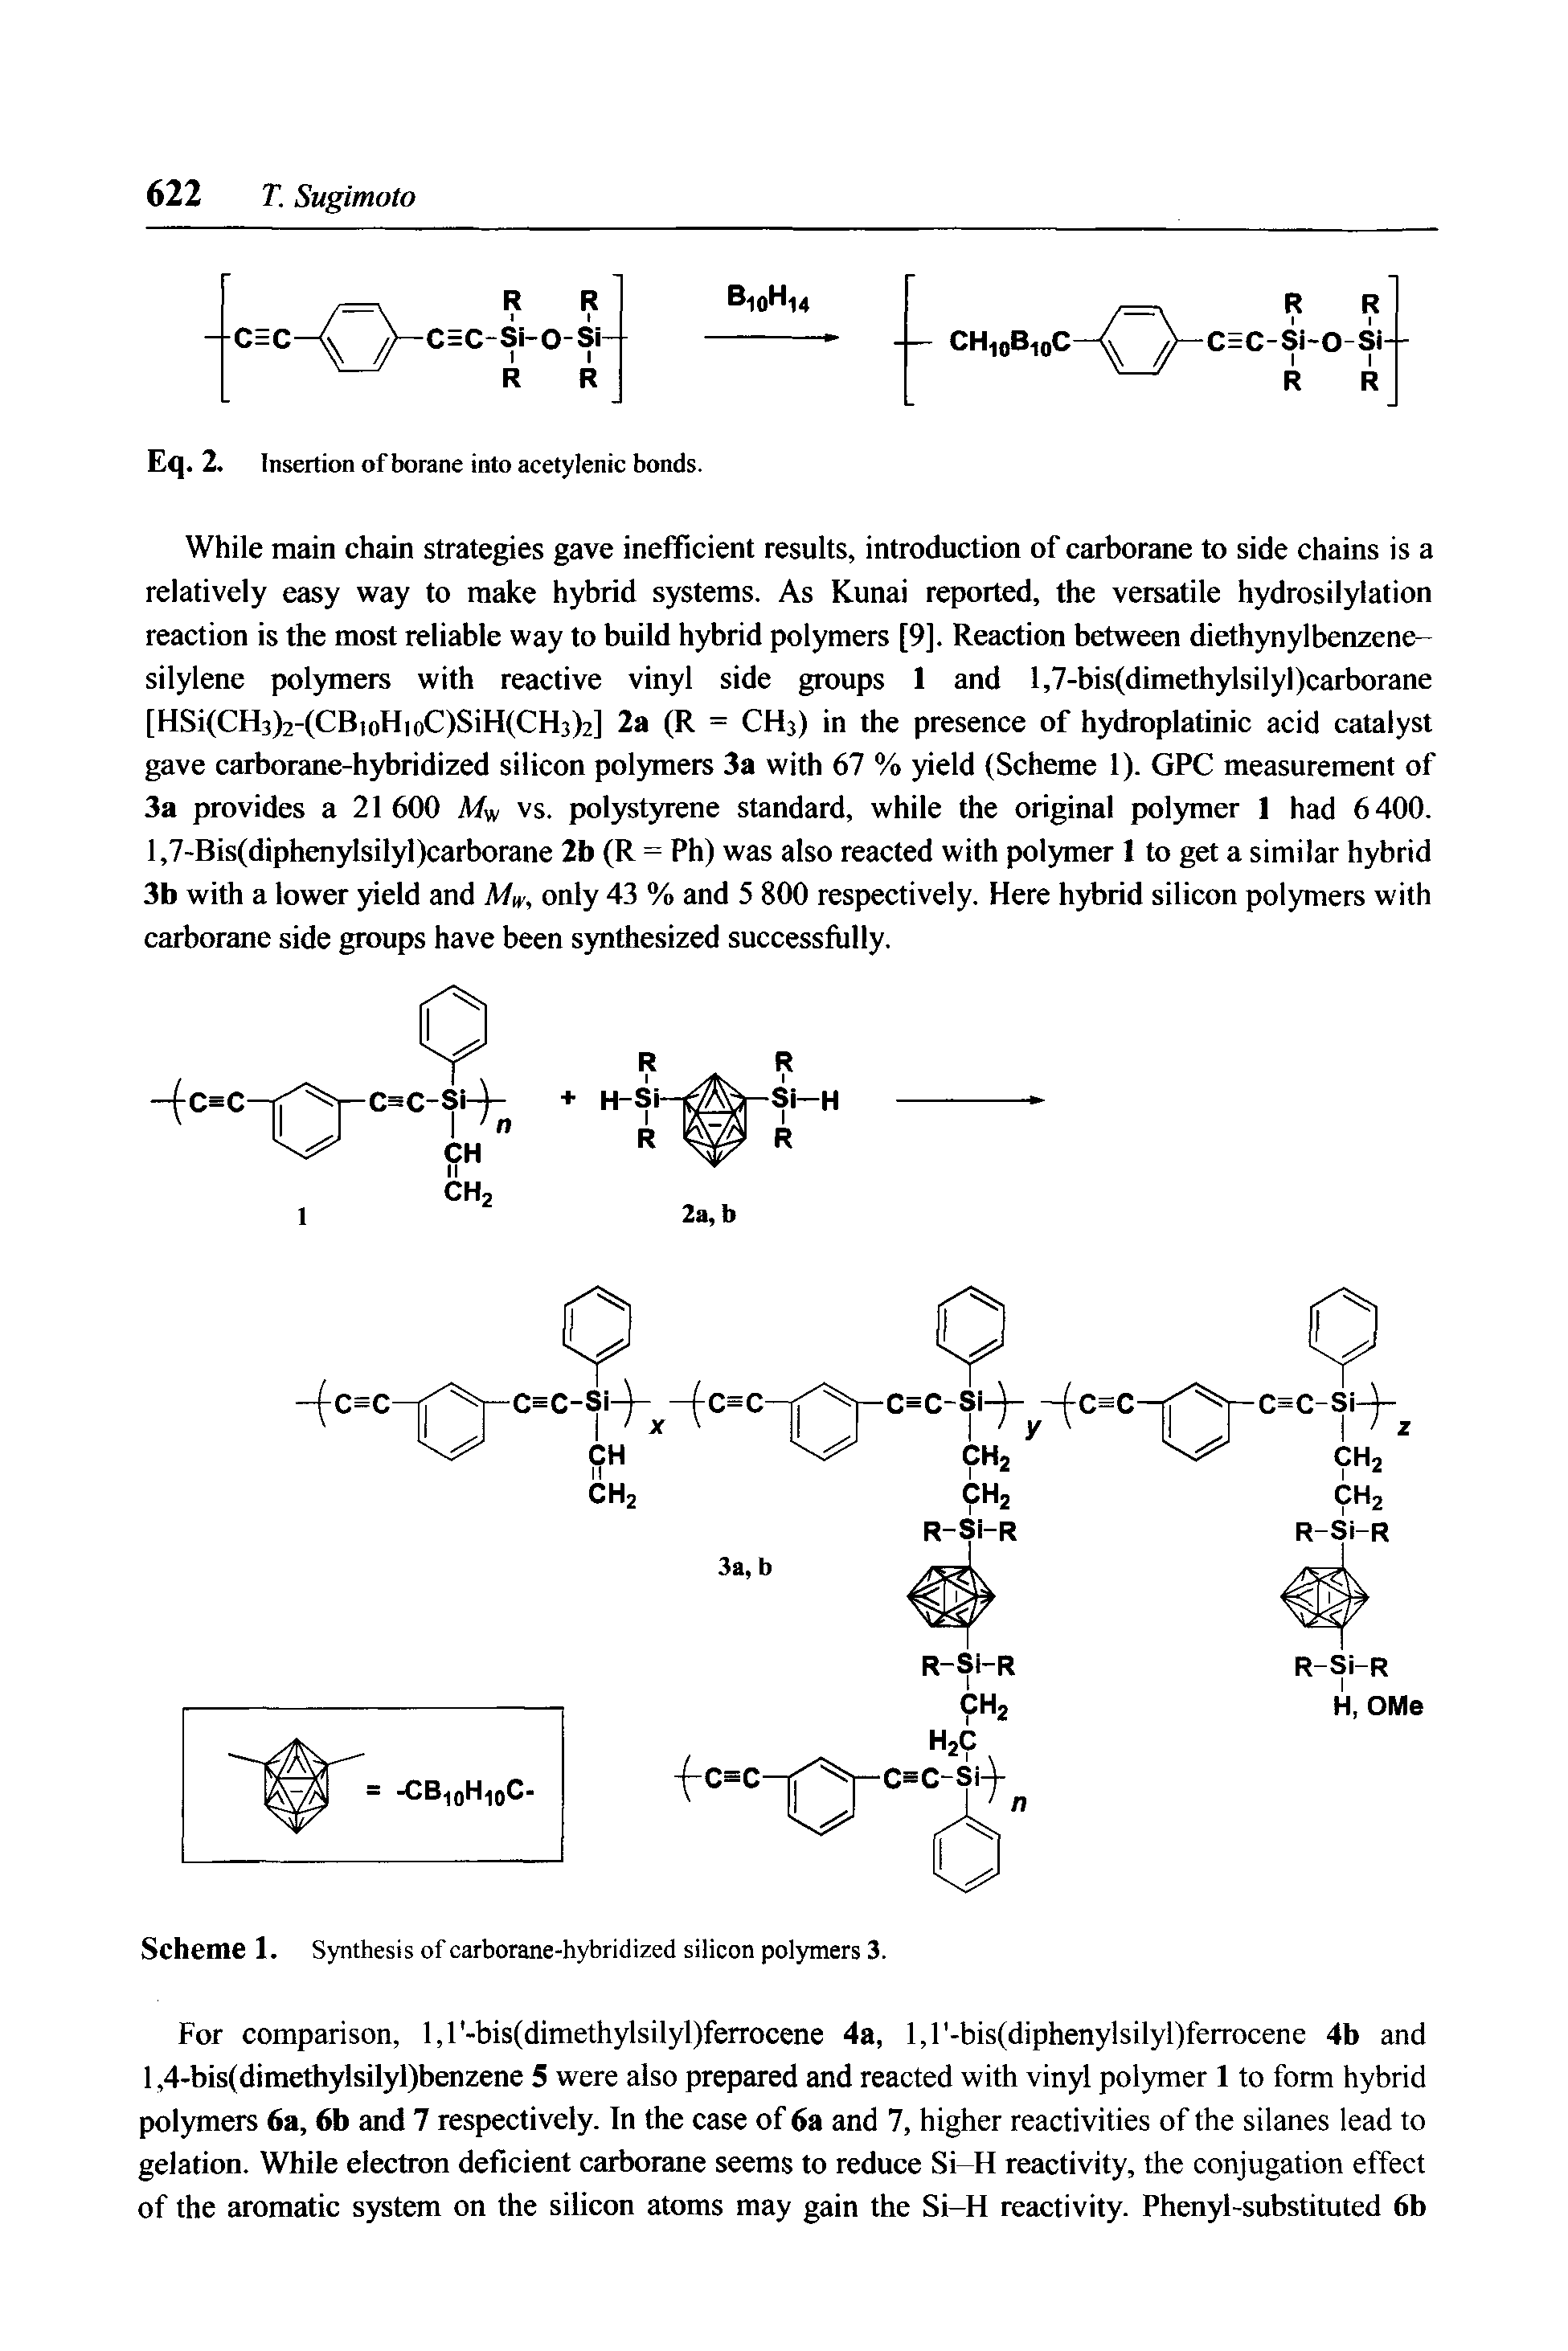 Scheme 1. Synthesis of carborane-hybridized silicon polymers 3.